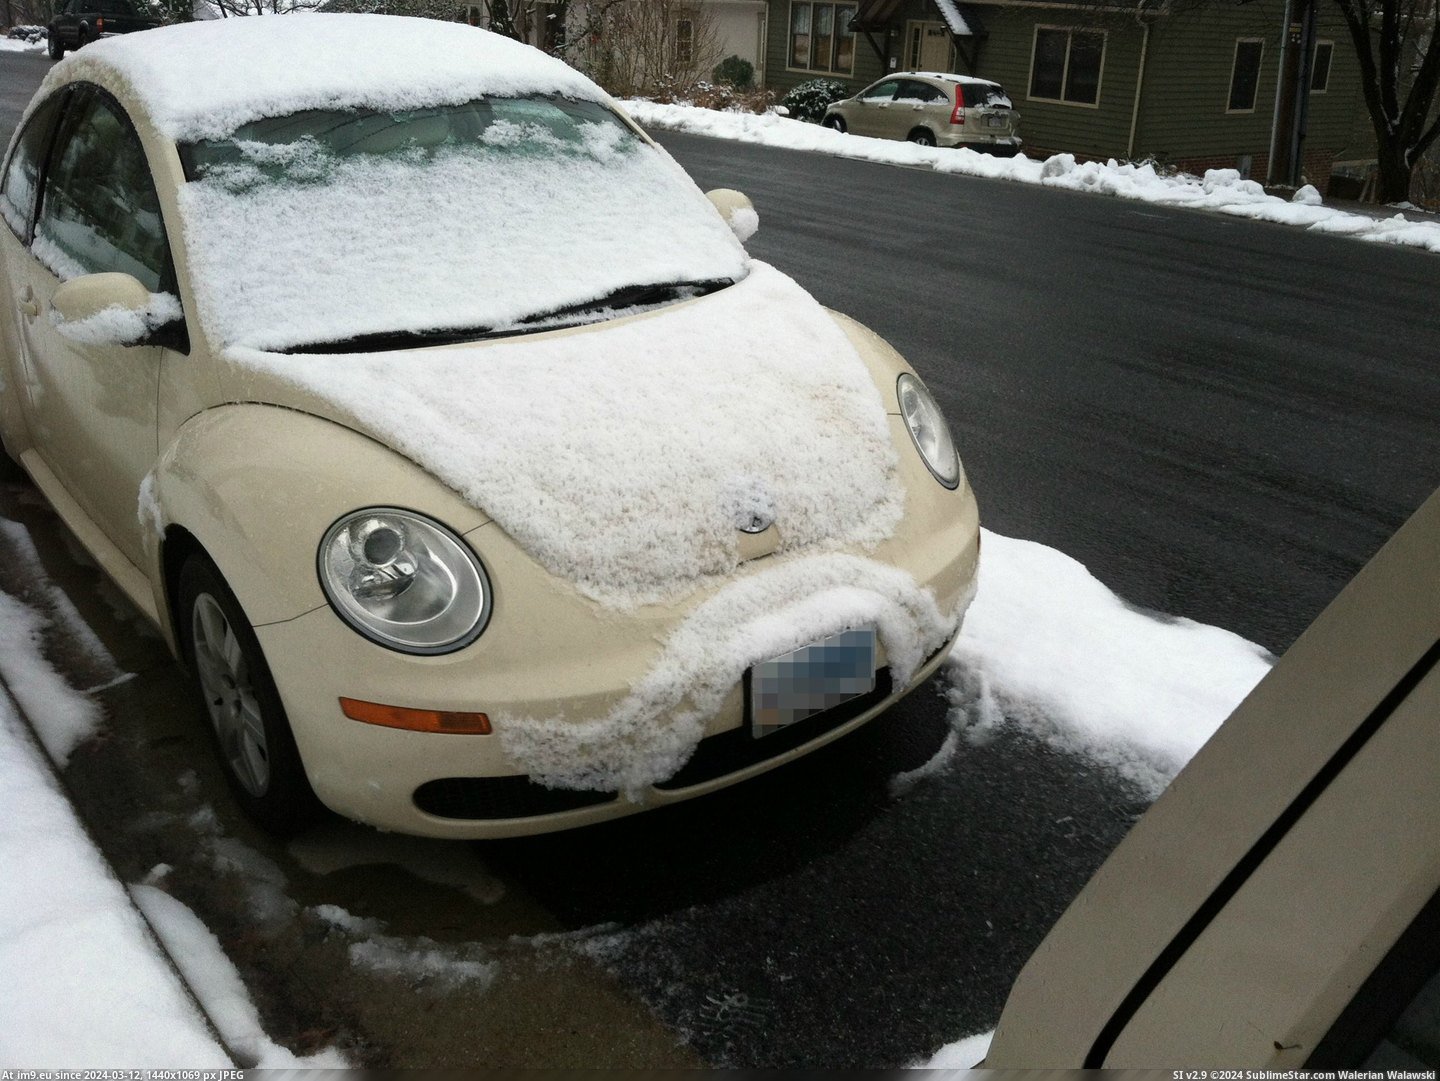 #Car #Mustache #Snow [Mildlyinteresting] This car has a mustache made of snow Pic. (Изображение из альбом My r/MILDLYINTERESTING favs))